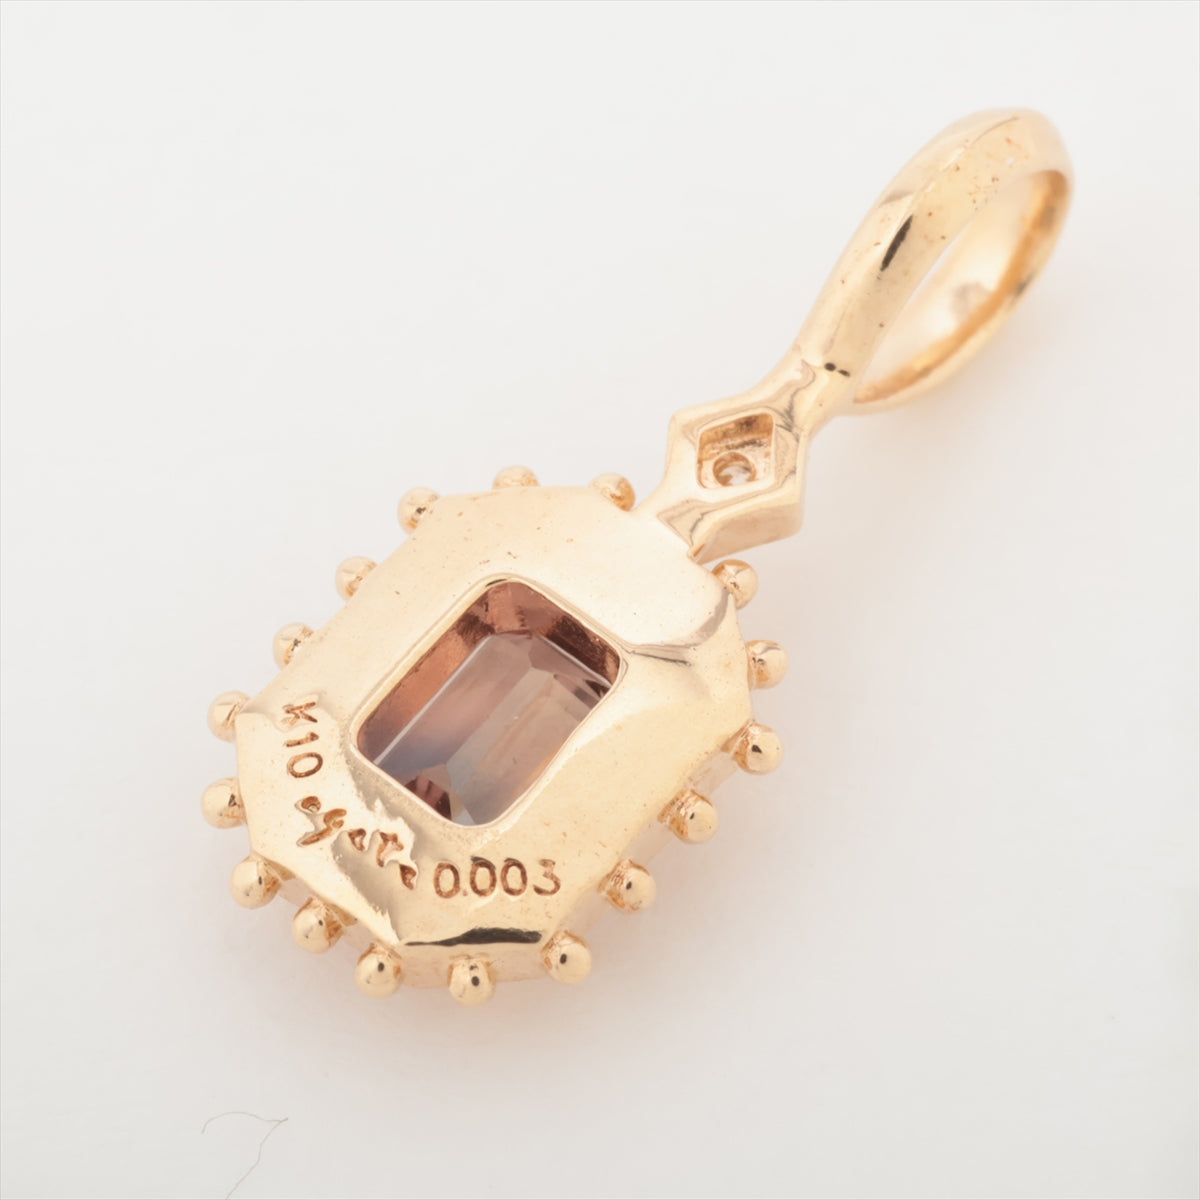 Agat Vial Sapphire Diamond Charm K10 (YG) 0.6g 0.003 E